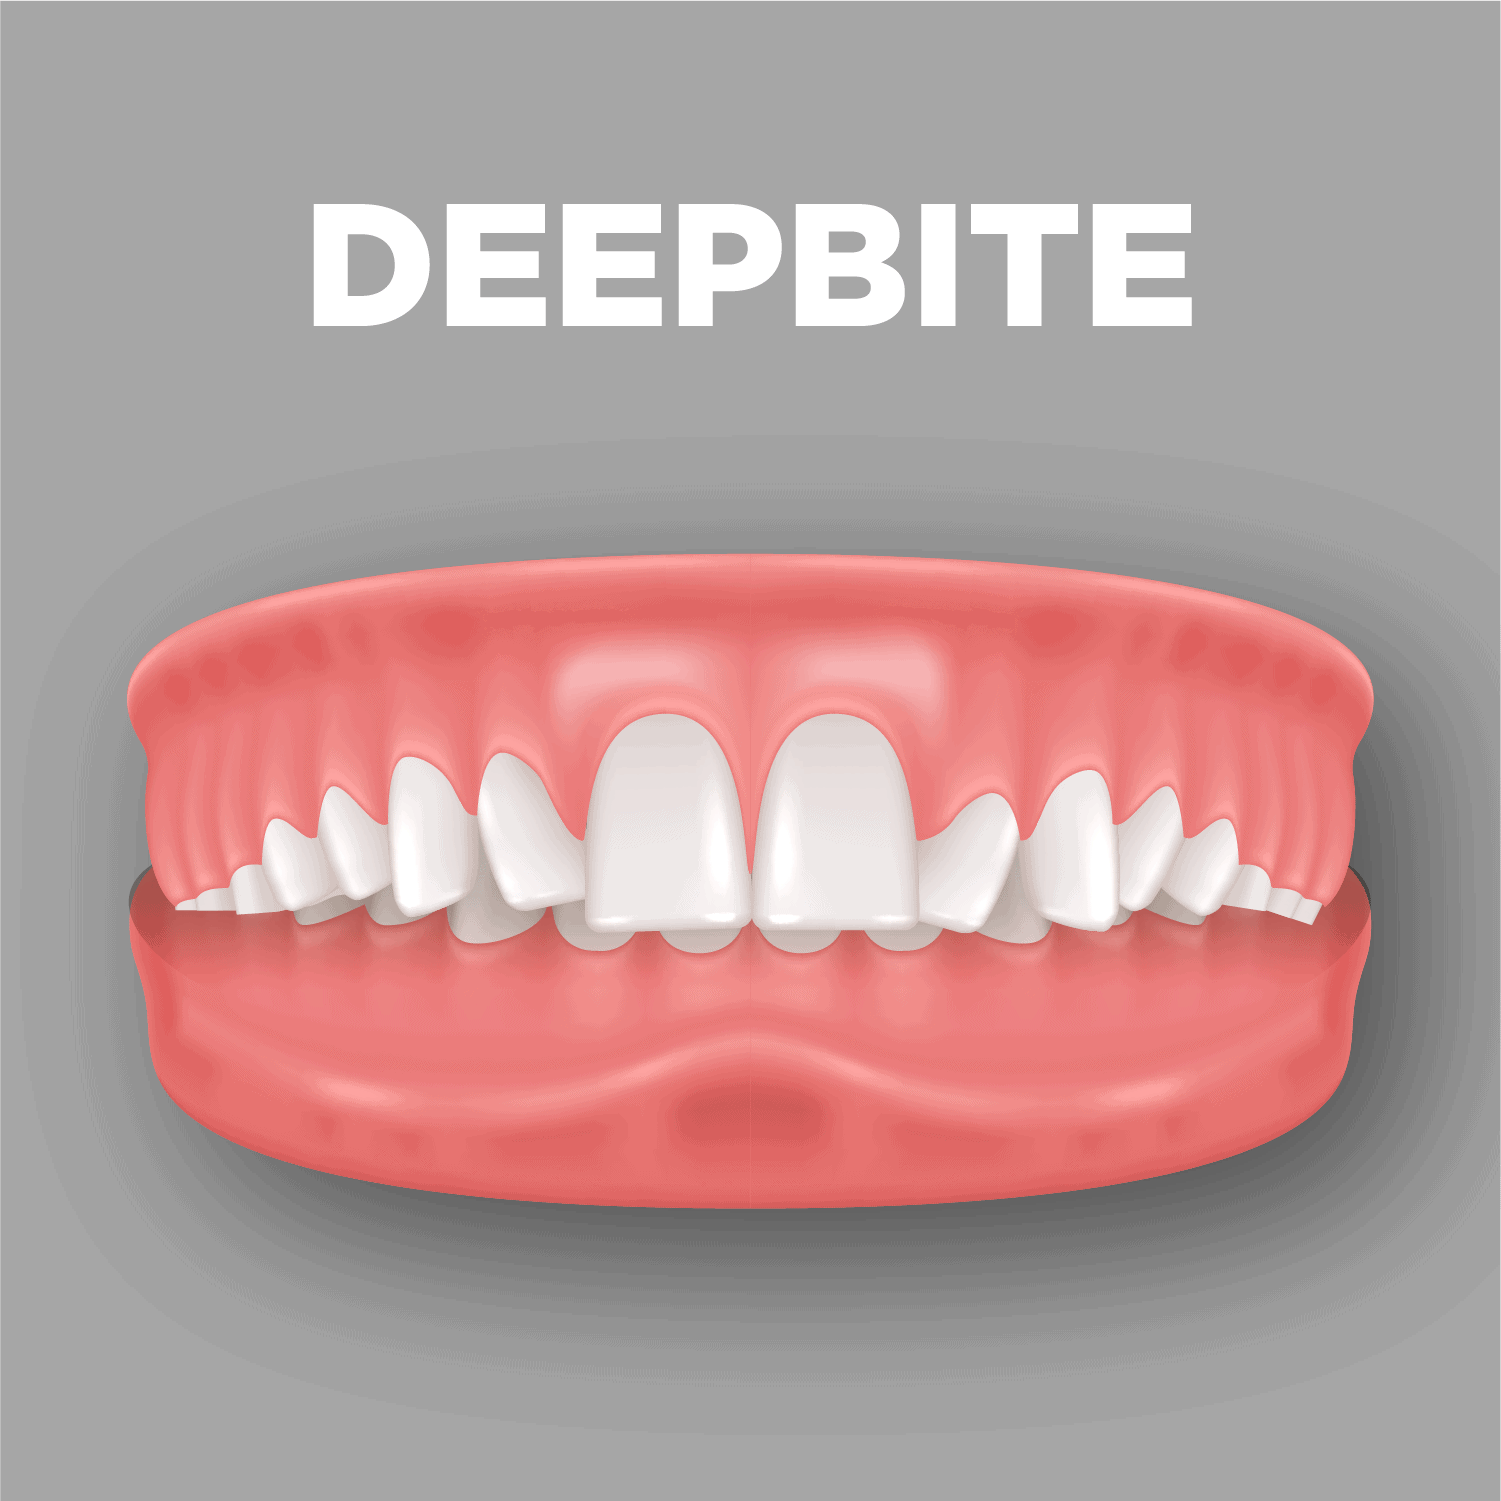 Deepbite